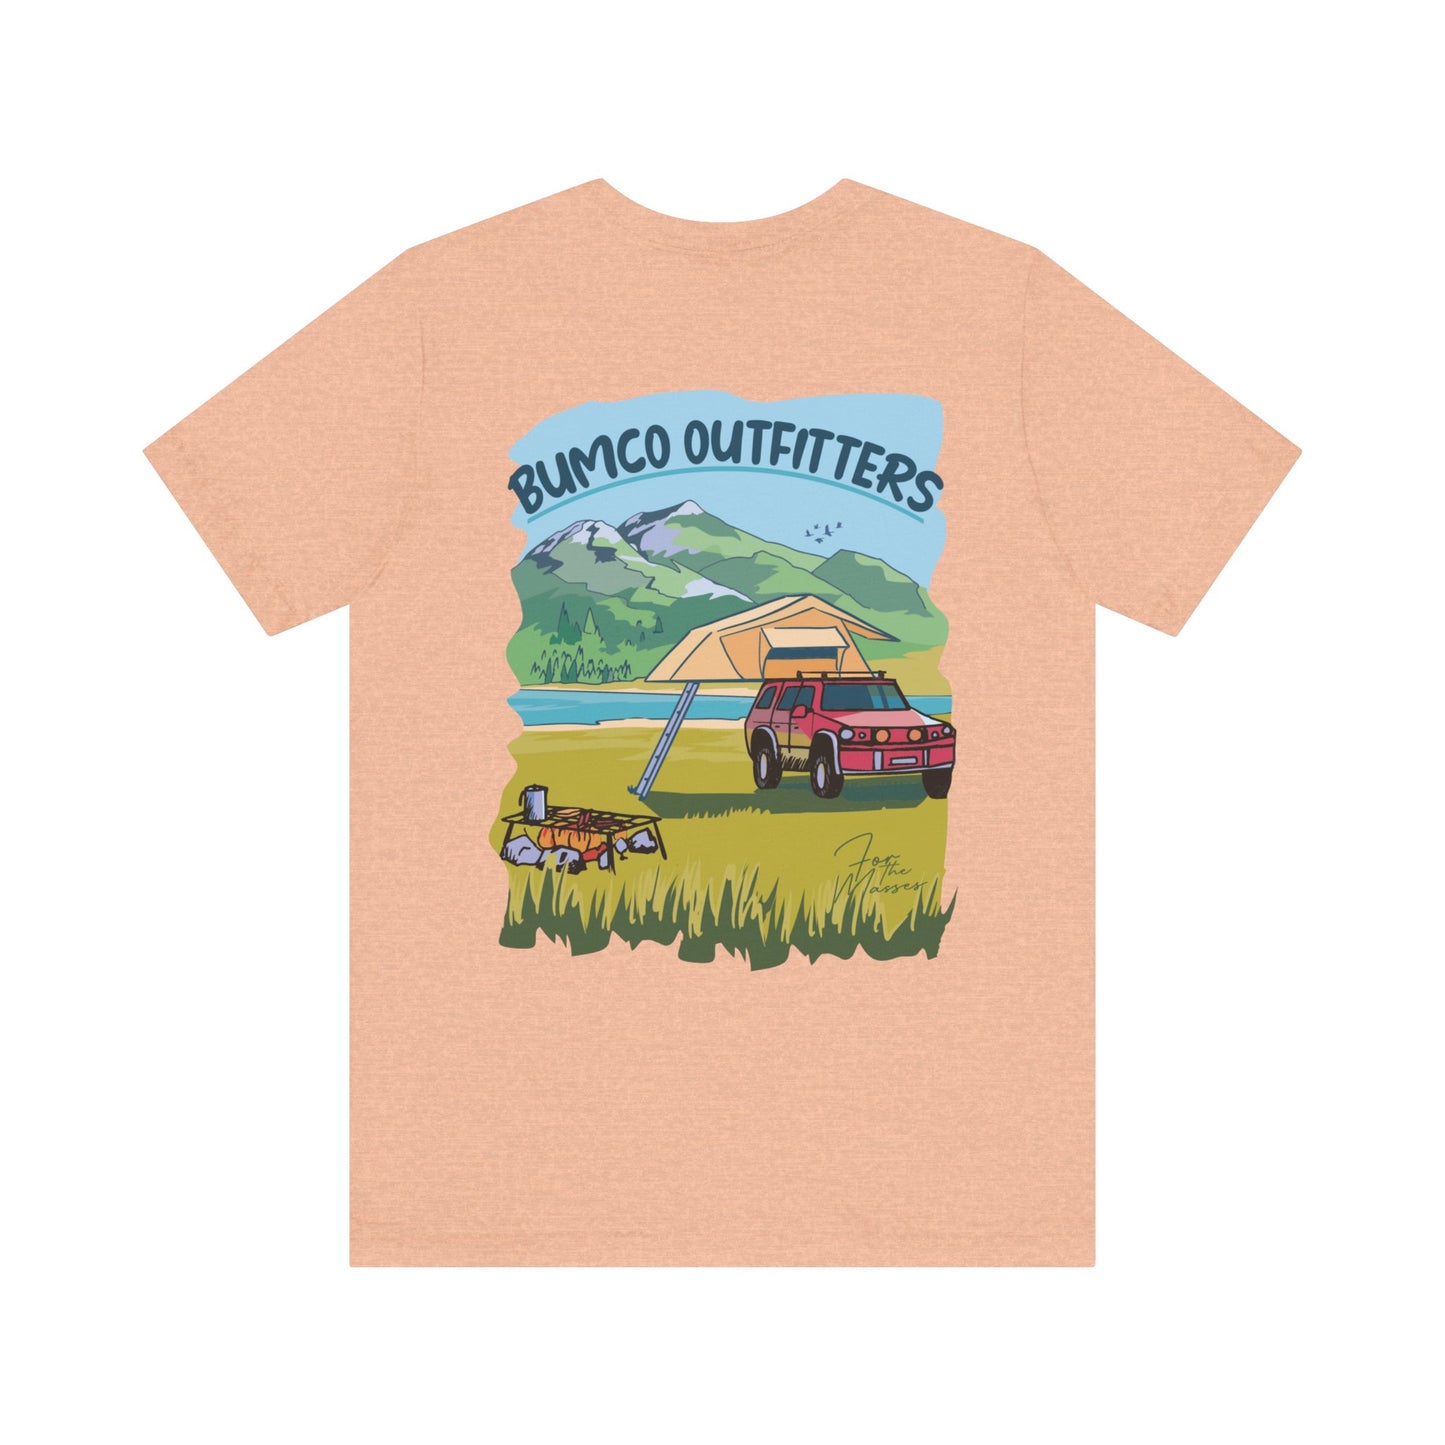 Campground - T-Shirt